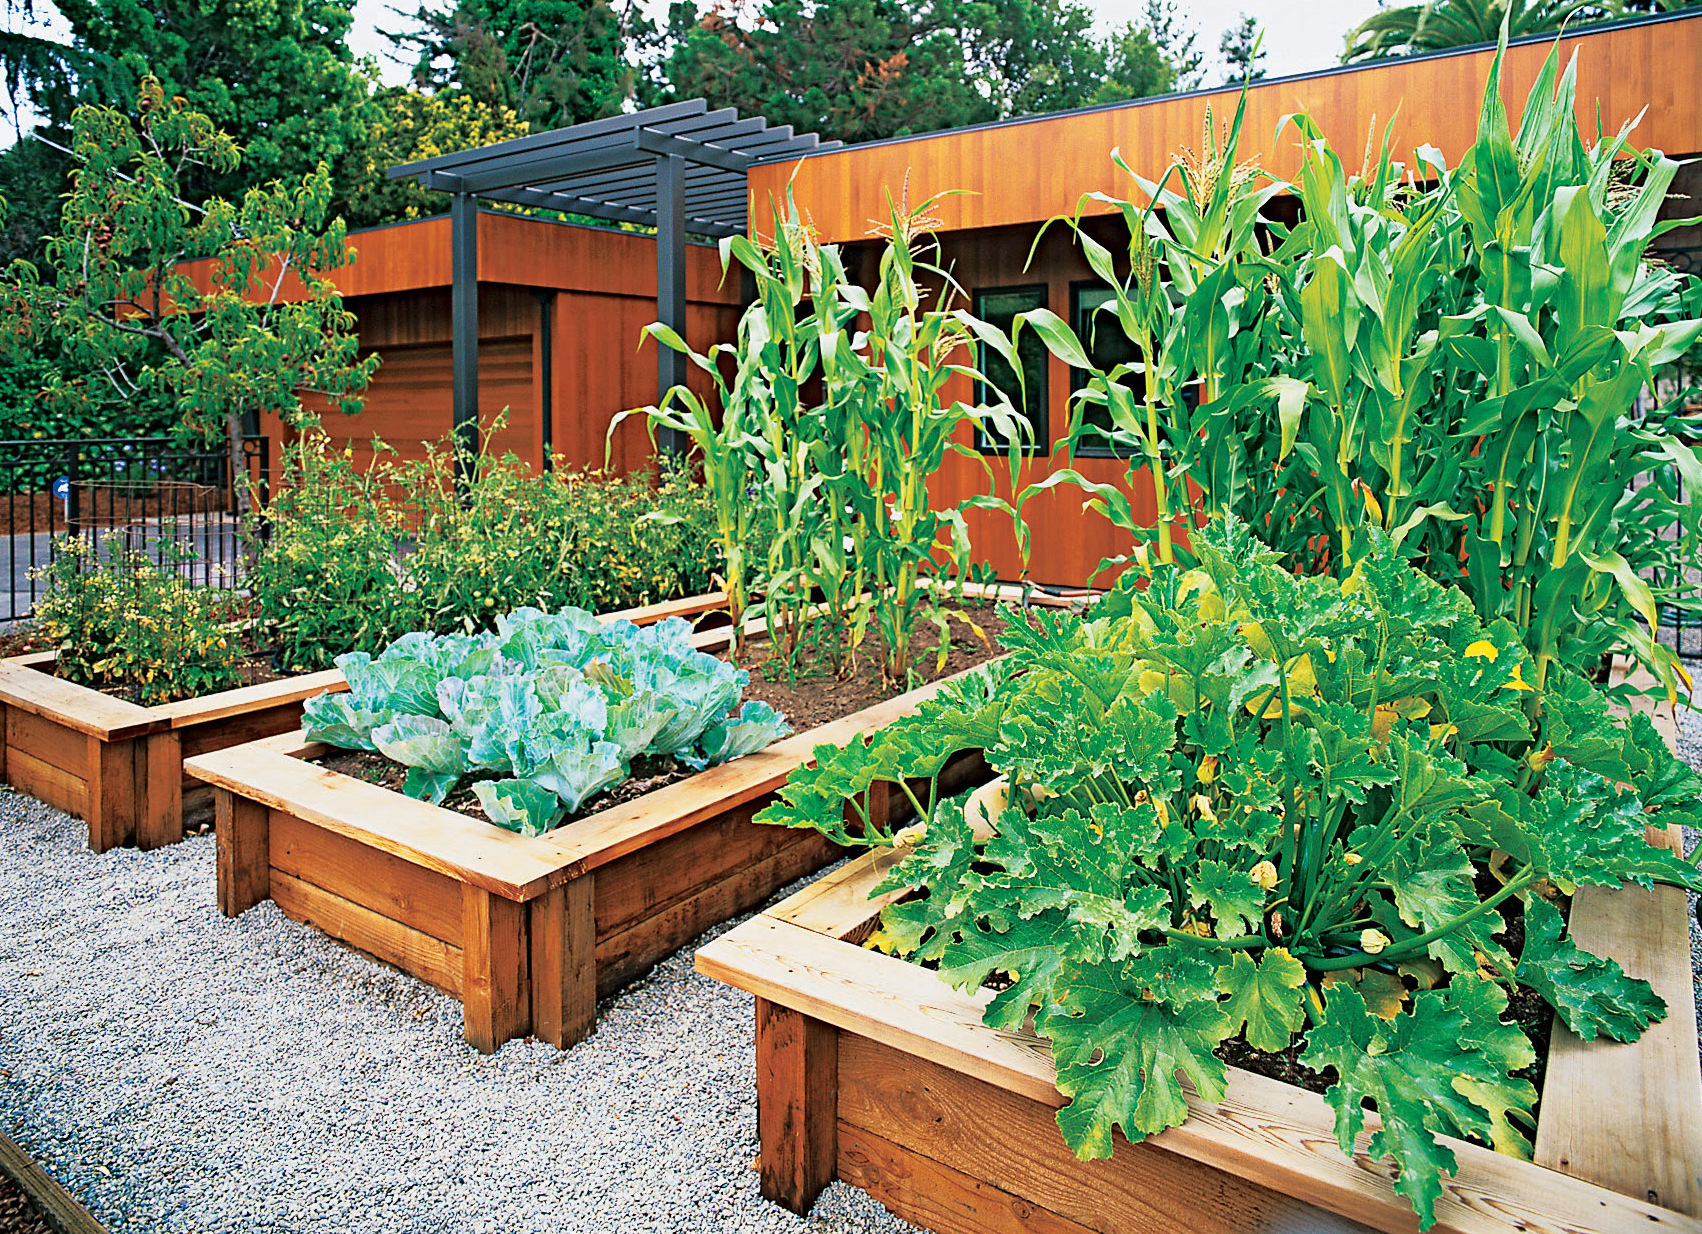 10 Great Front Yard Vegetable Garden Ideas veggies up front sunset magazine 2024